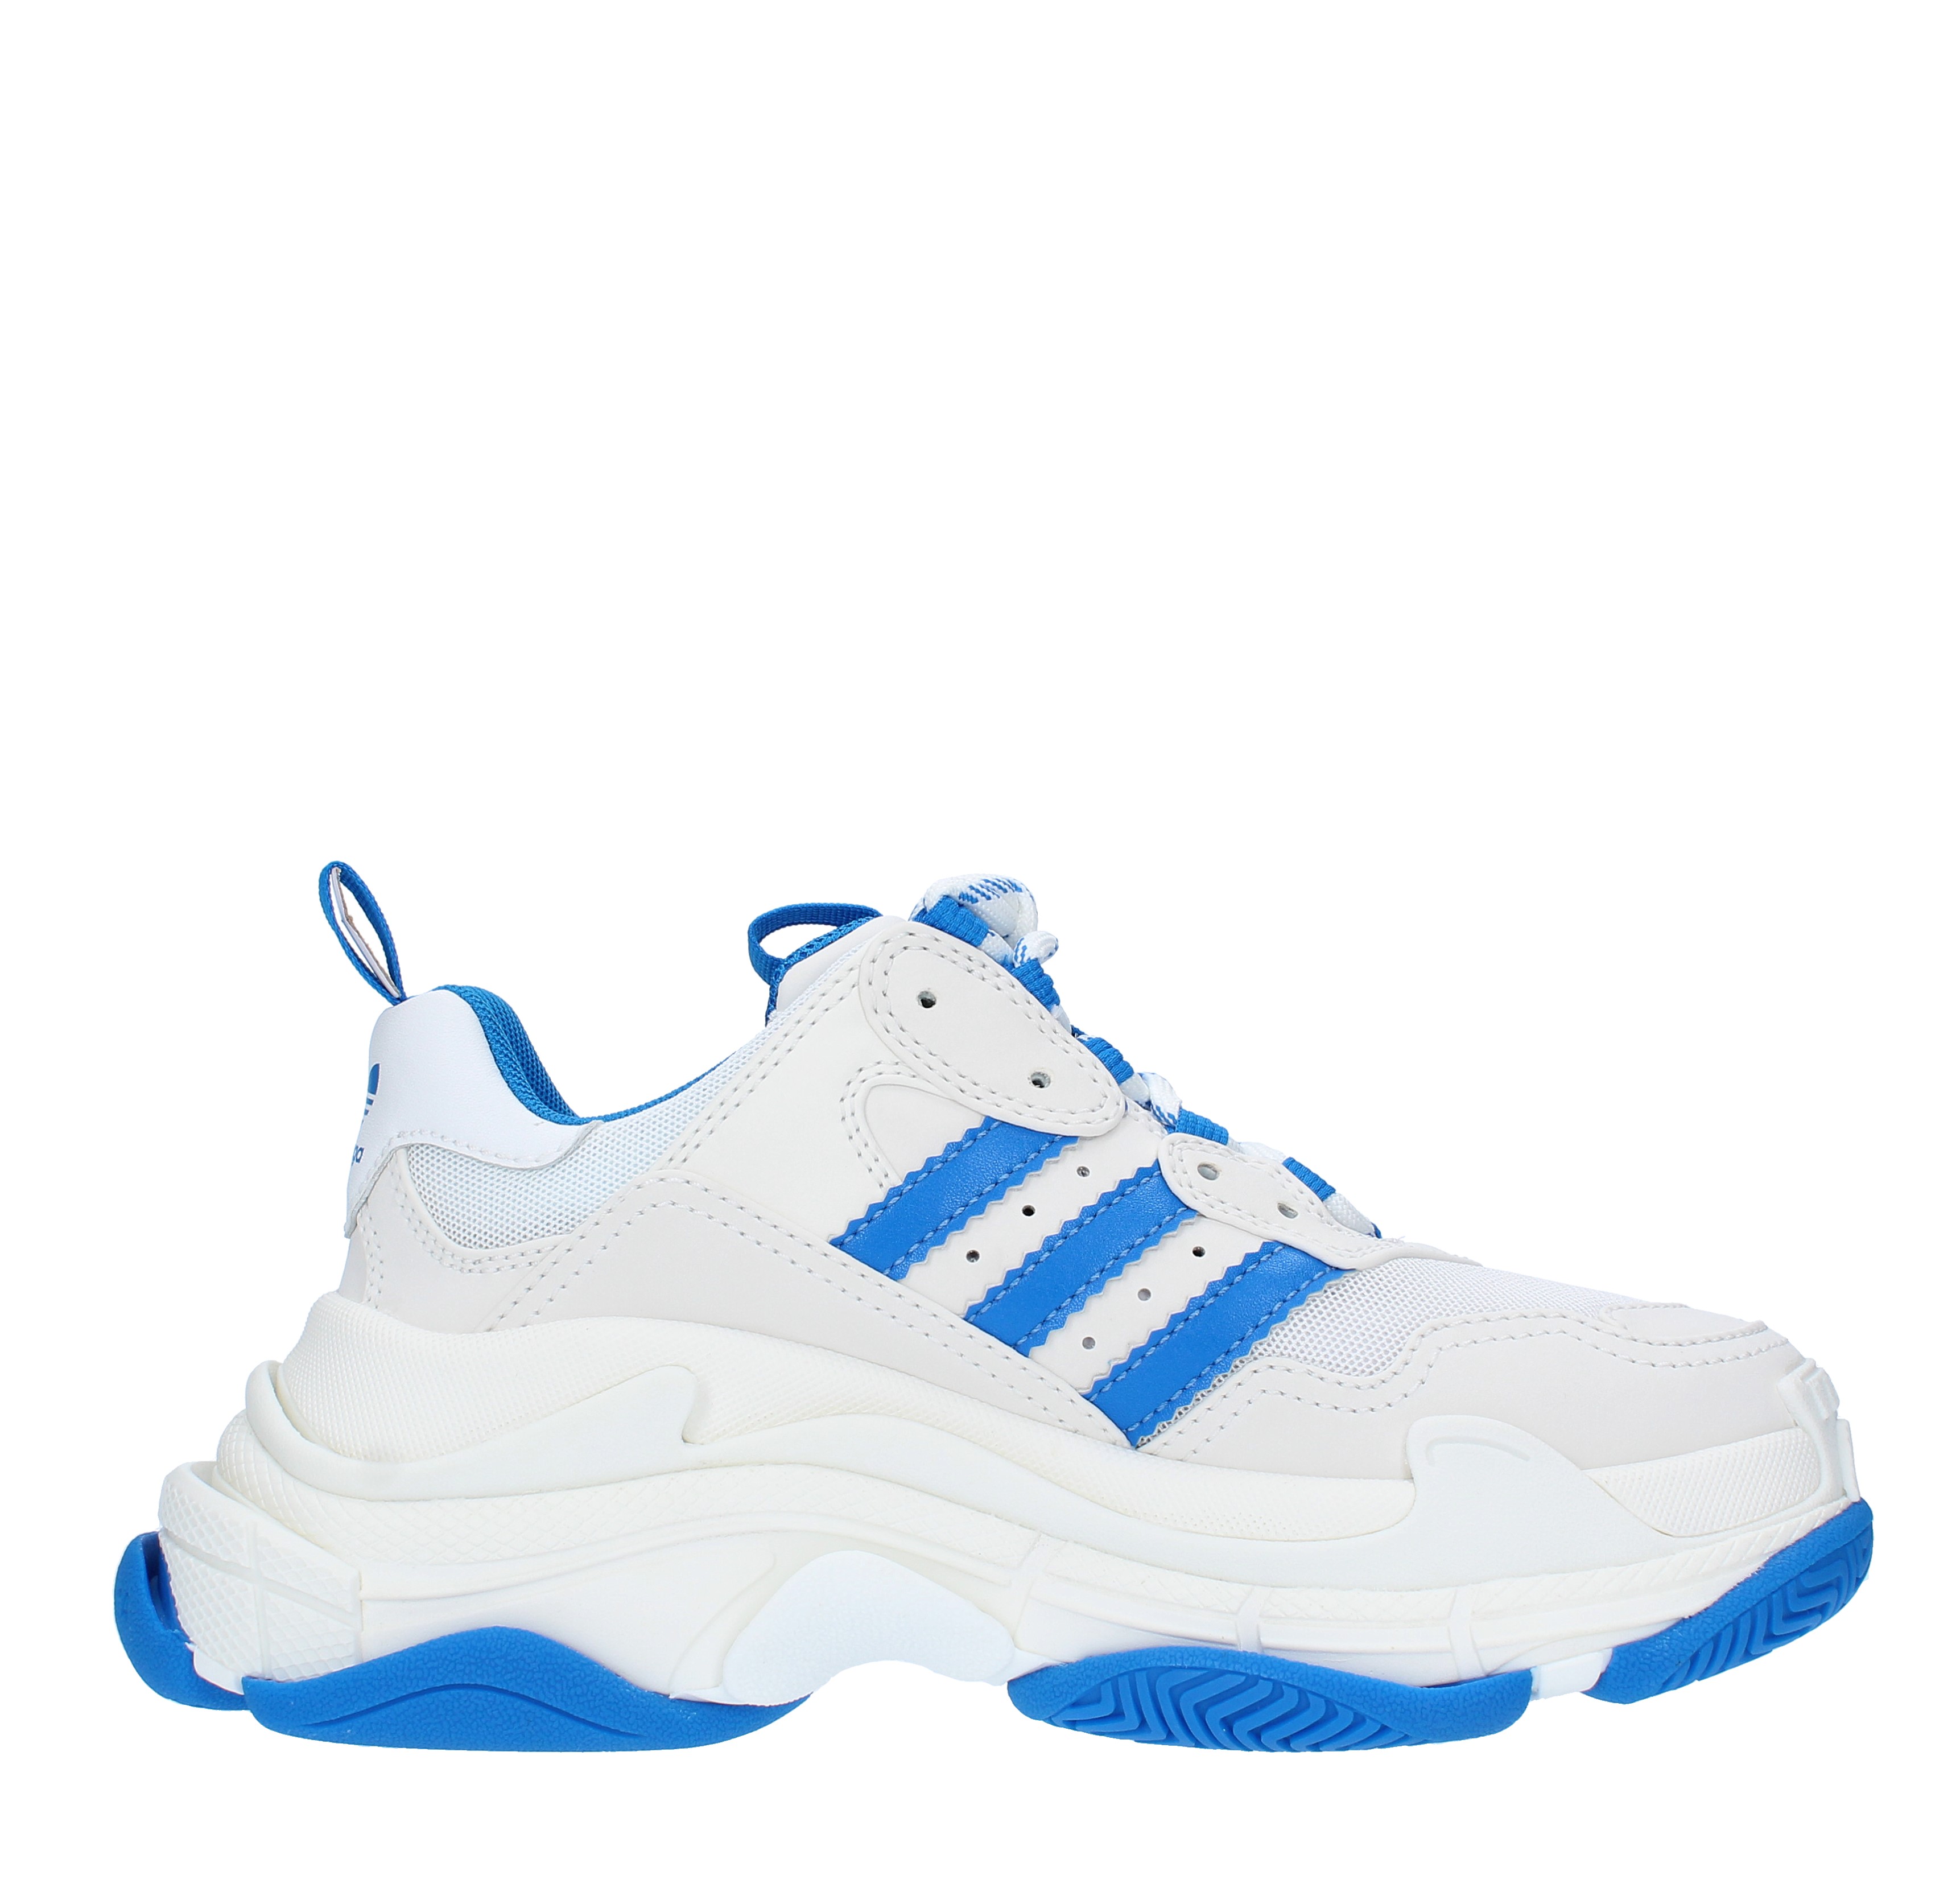 Sneakers BALENCIAGA X ADIDAS TRIPLE S in doppia schiuma e mesh bianco e  azzurro - BALENCIAGA X ADIDAS - Ginevra calzature